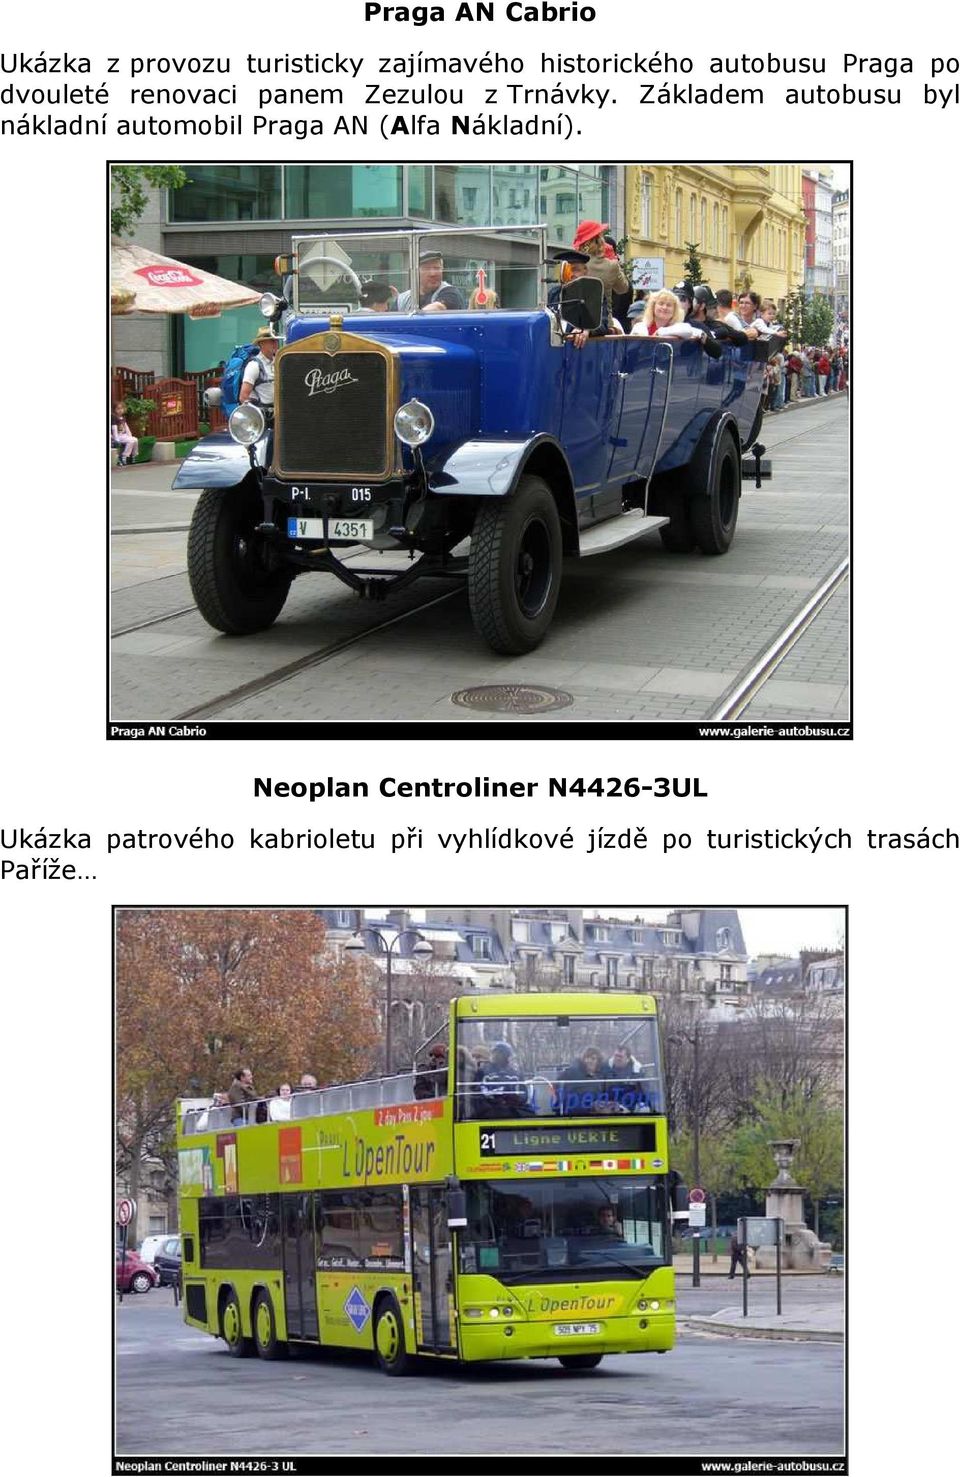 Základem autobusu byl nákladní automobil Praga AN (Alfa Nákladní).